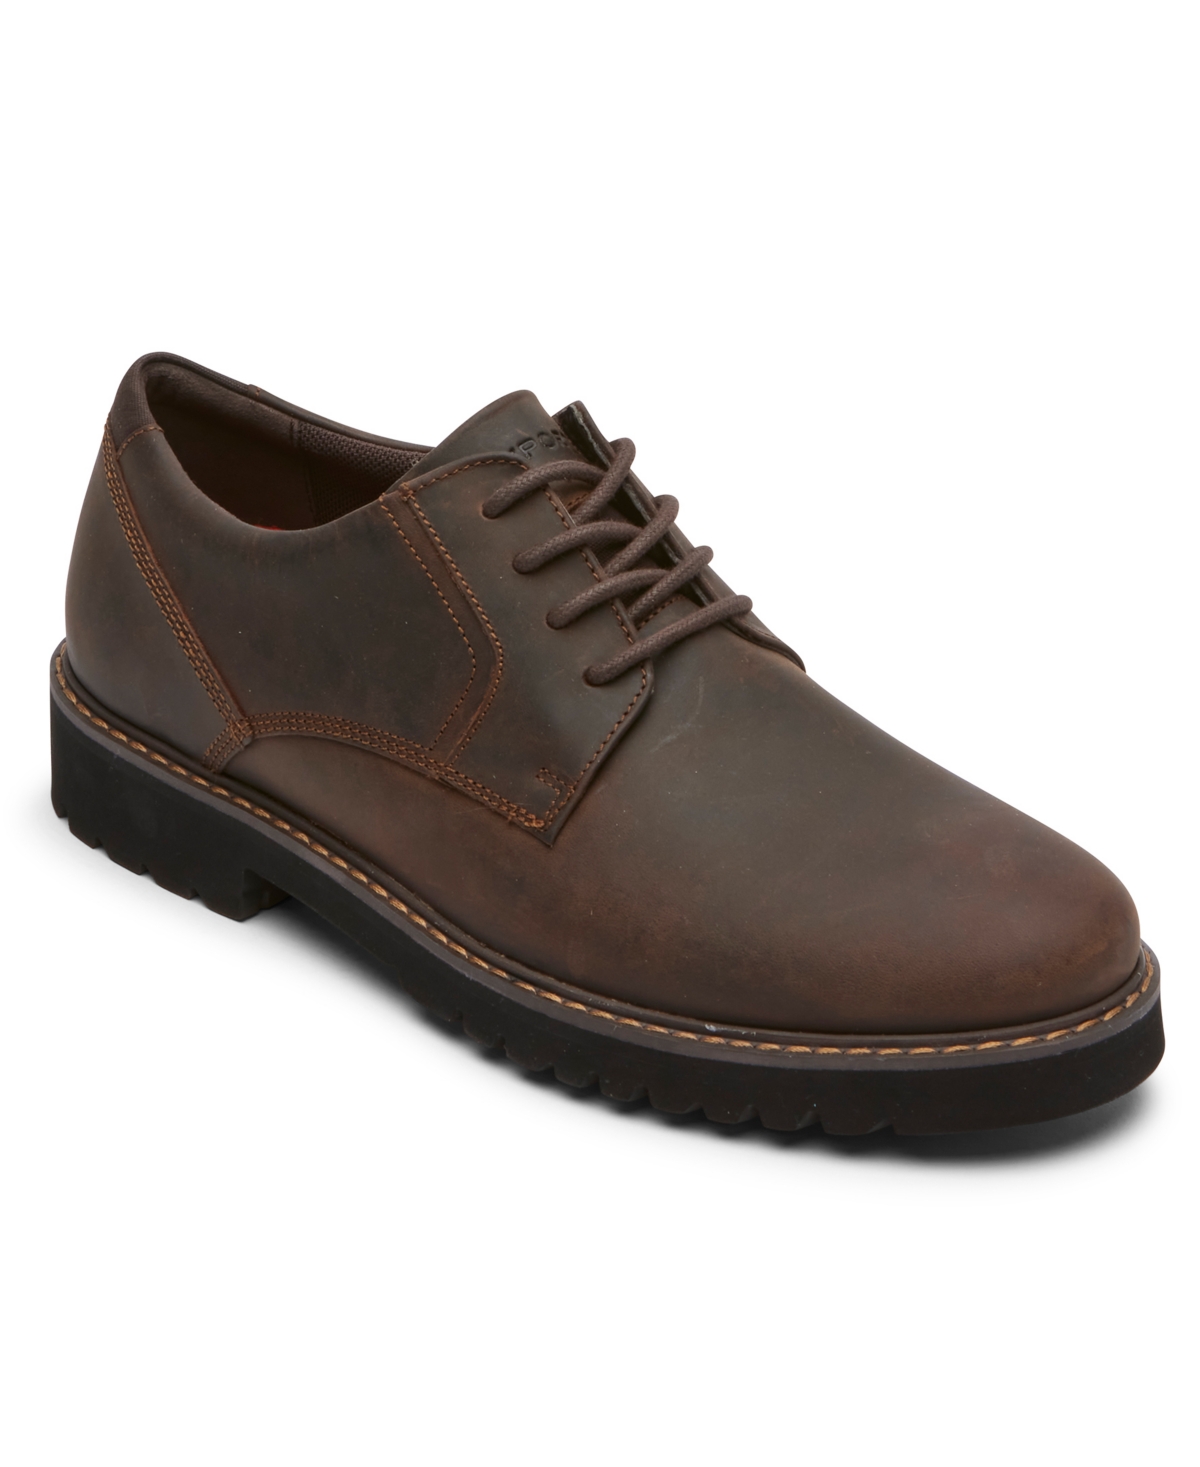 Men's Maverick Plain Toe Oxford Shoes - Brown